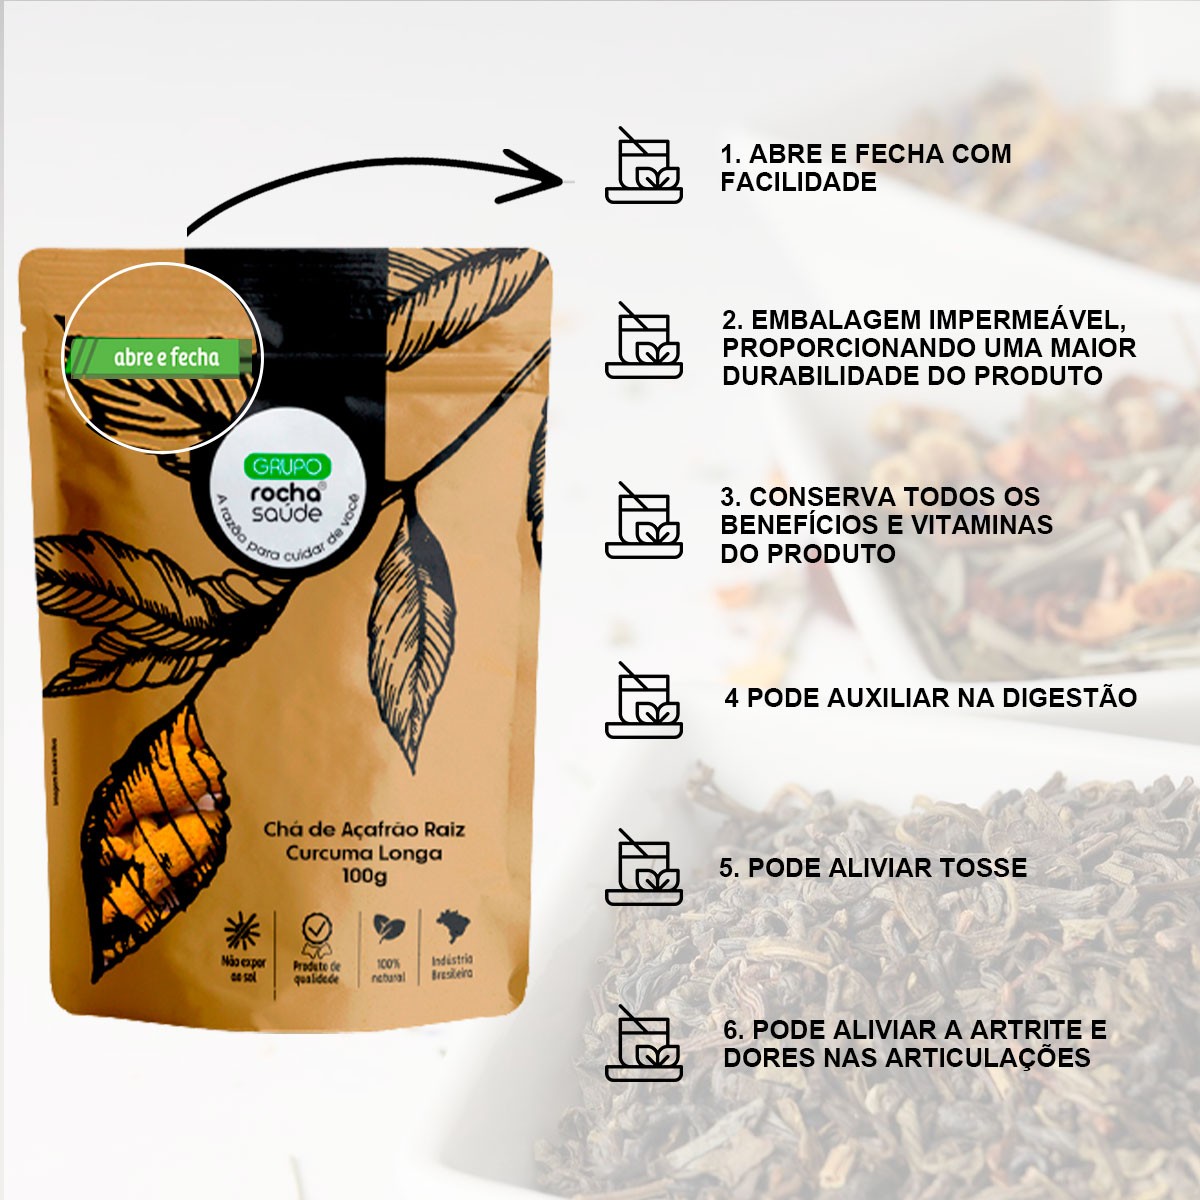 Chá de Açafrão Raiz (Curcuma) - Curcuma Longa - 100g